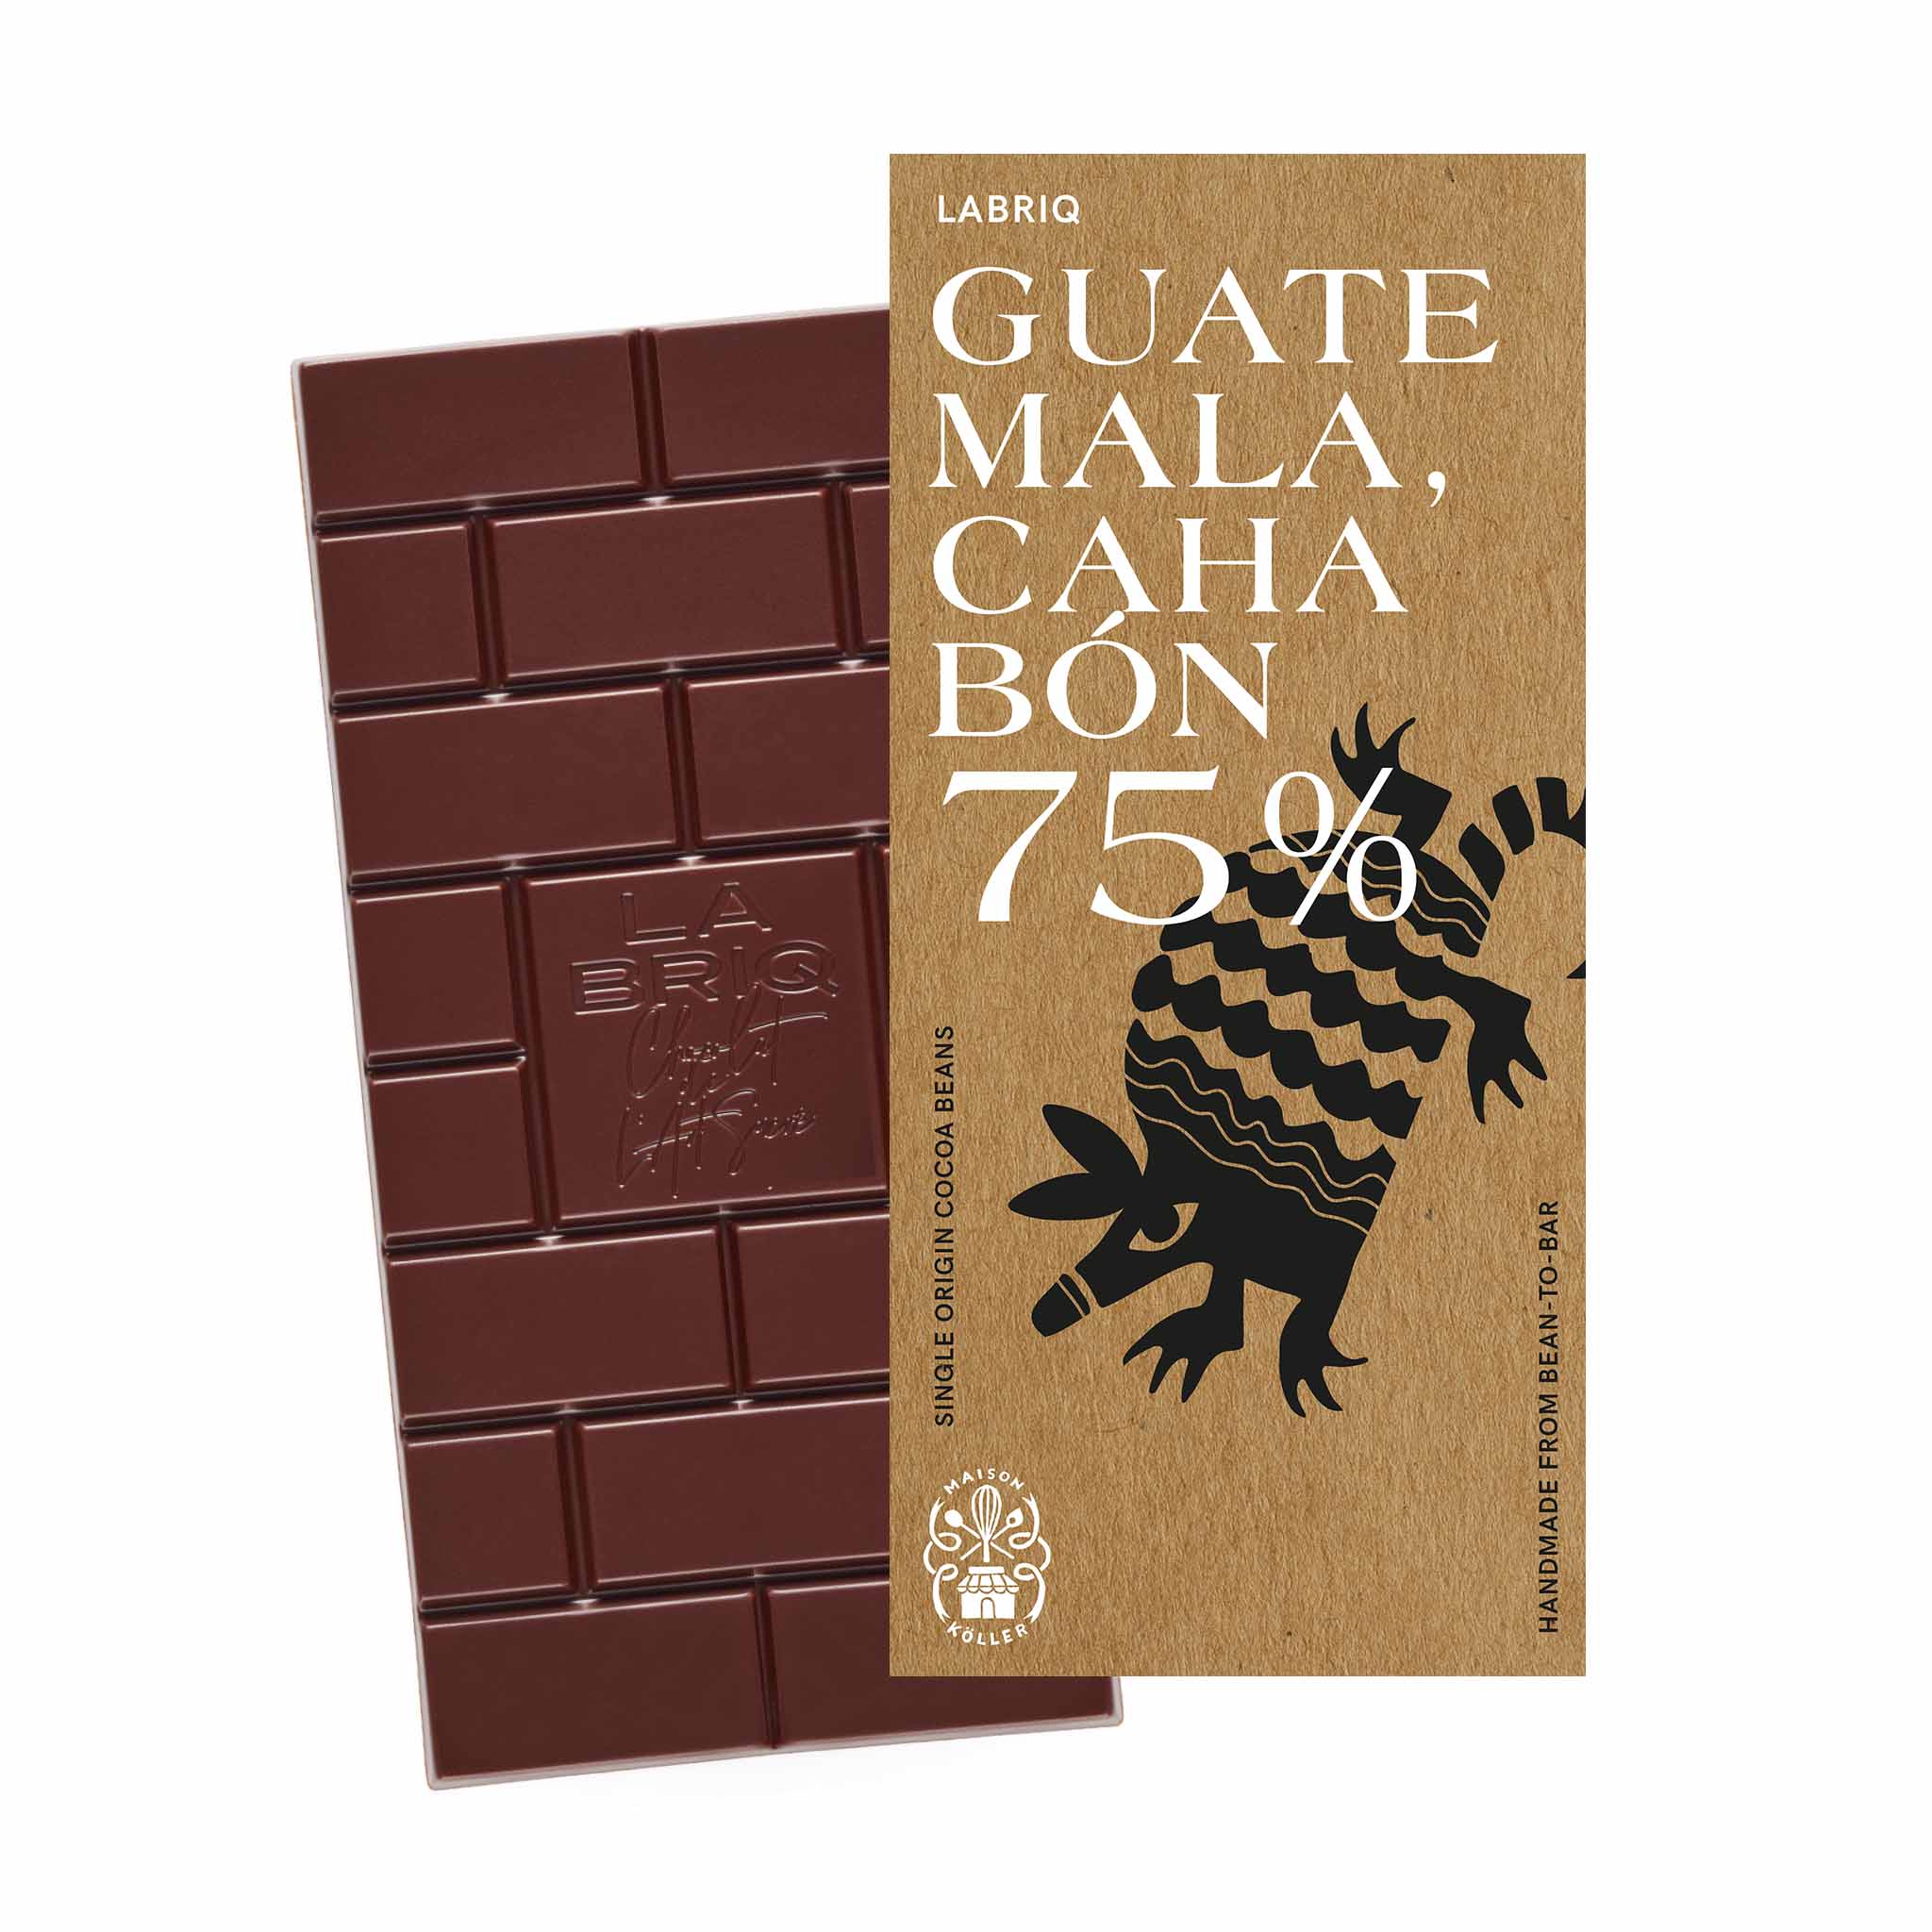 Tafelschokolade »LABRIQ Guatemala, Cahabón, 75%«